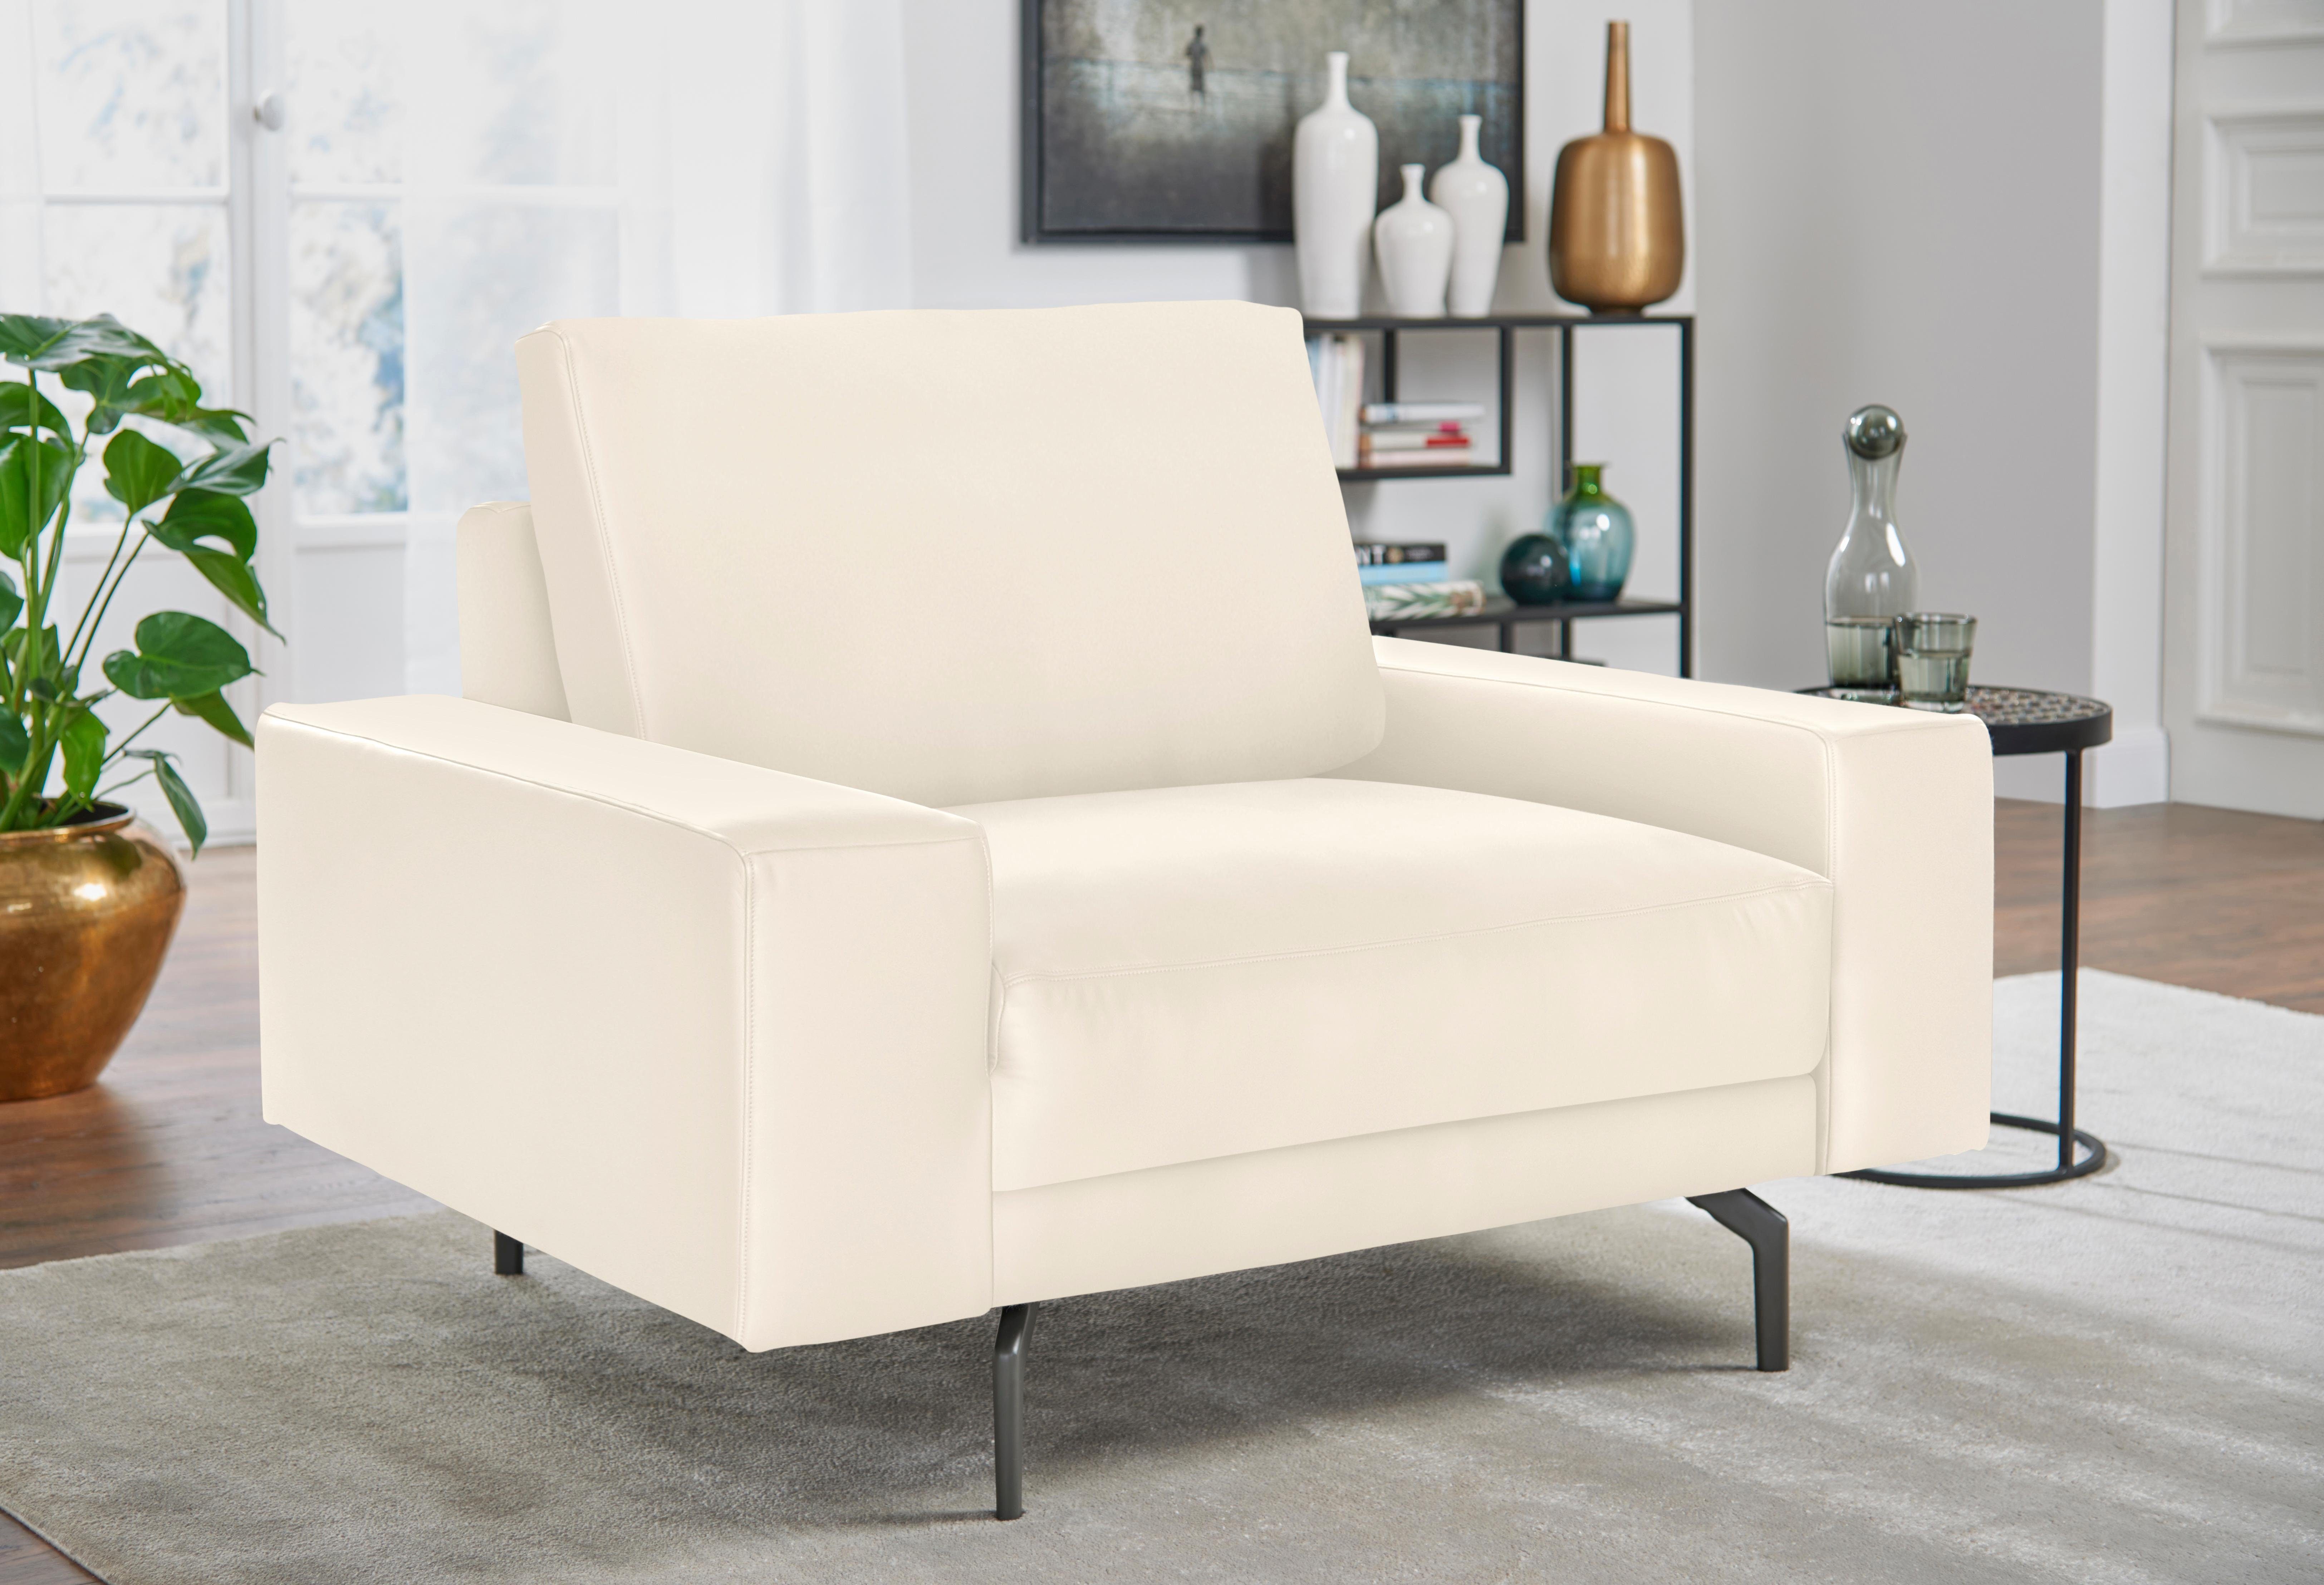 hülsta sofa Sessel hs.450, Armlehne breit niedrig, Alugussfüße in umbragrau, Breite 120 cm